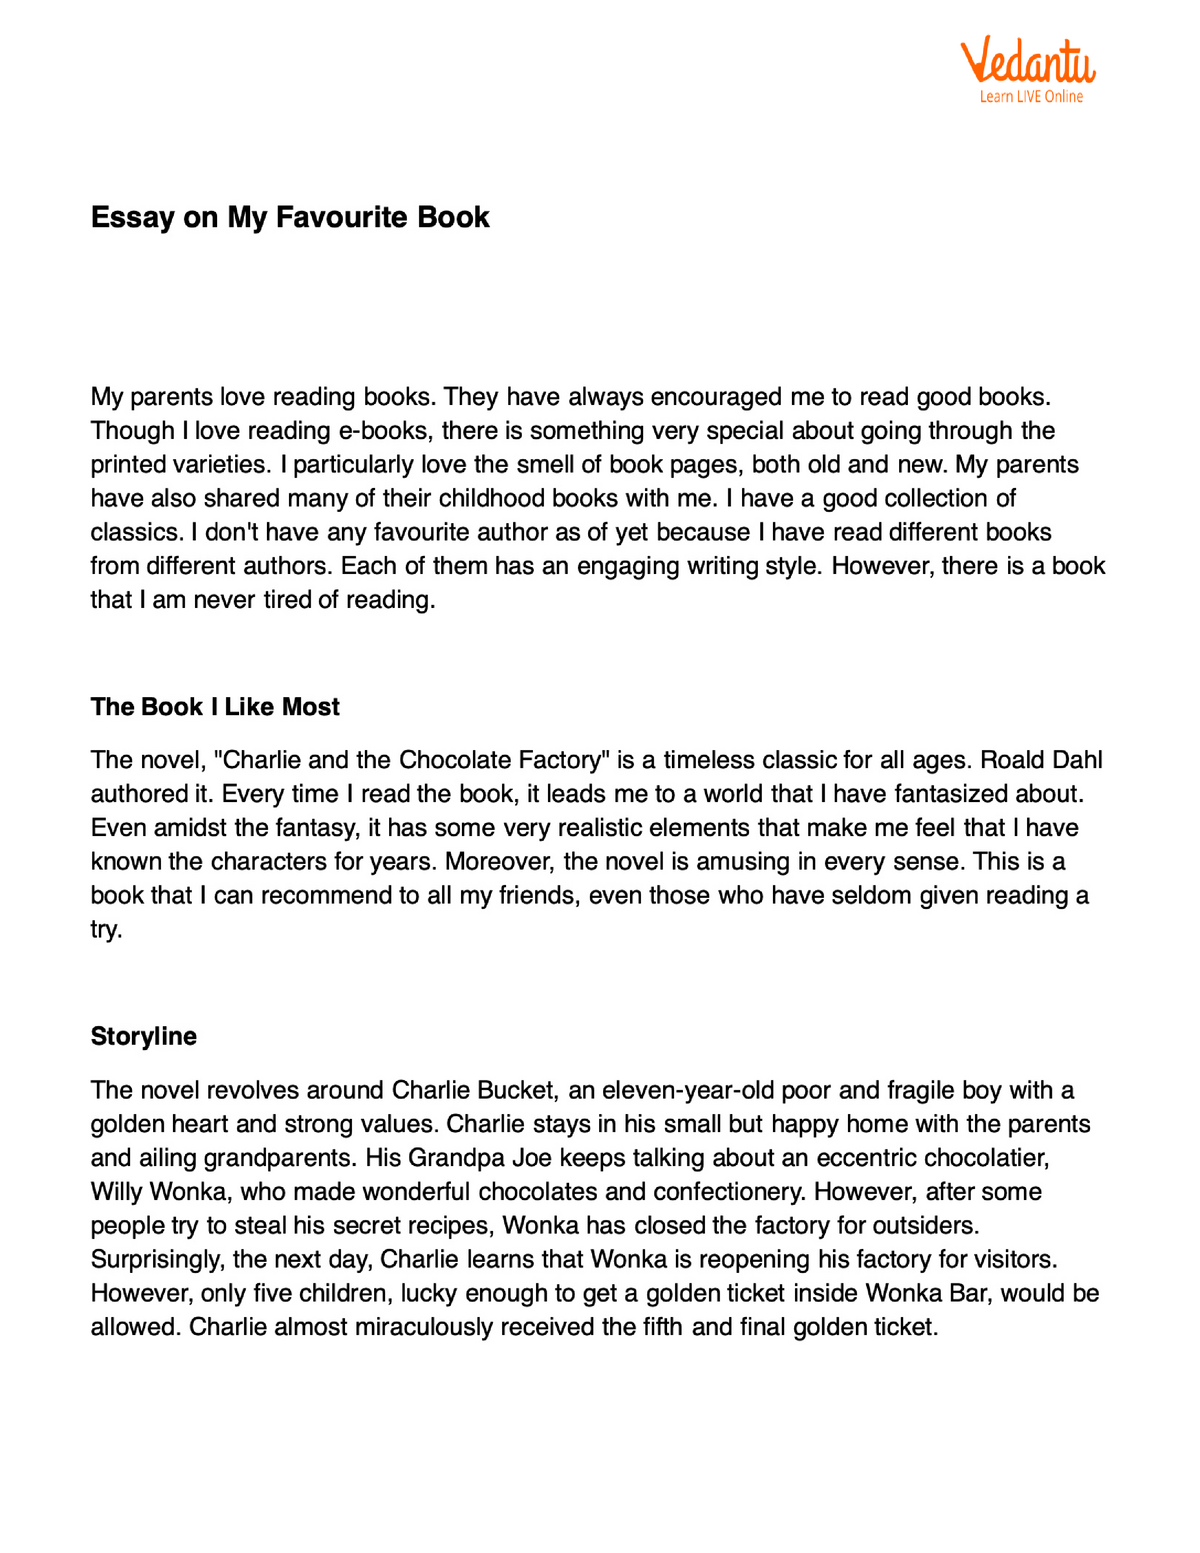 short essay on favorite book